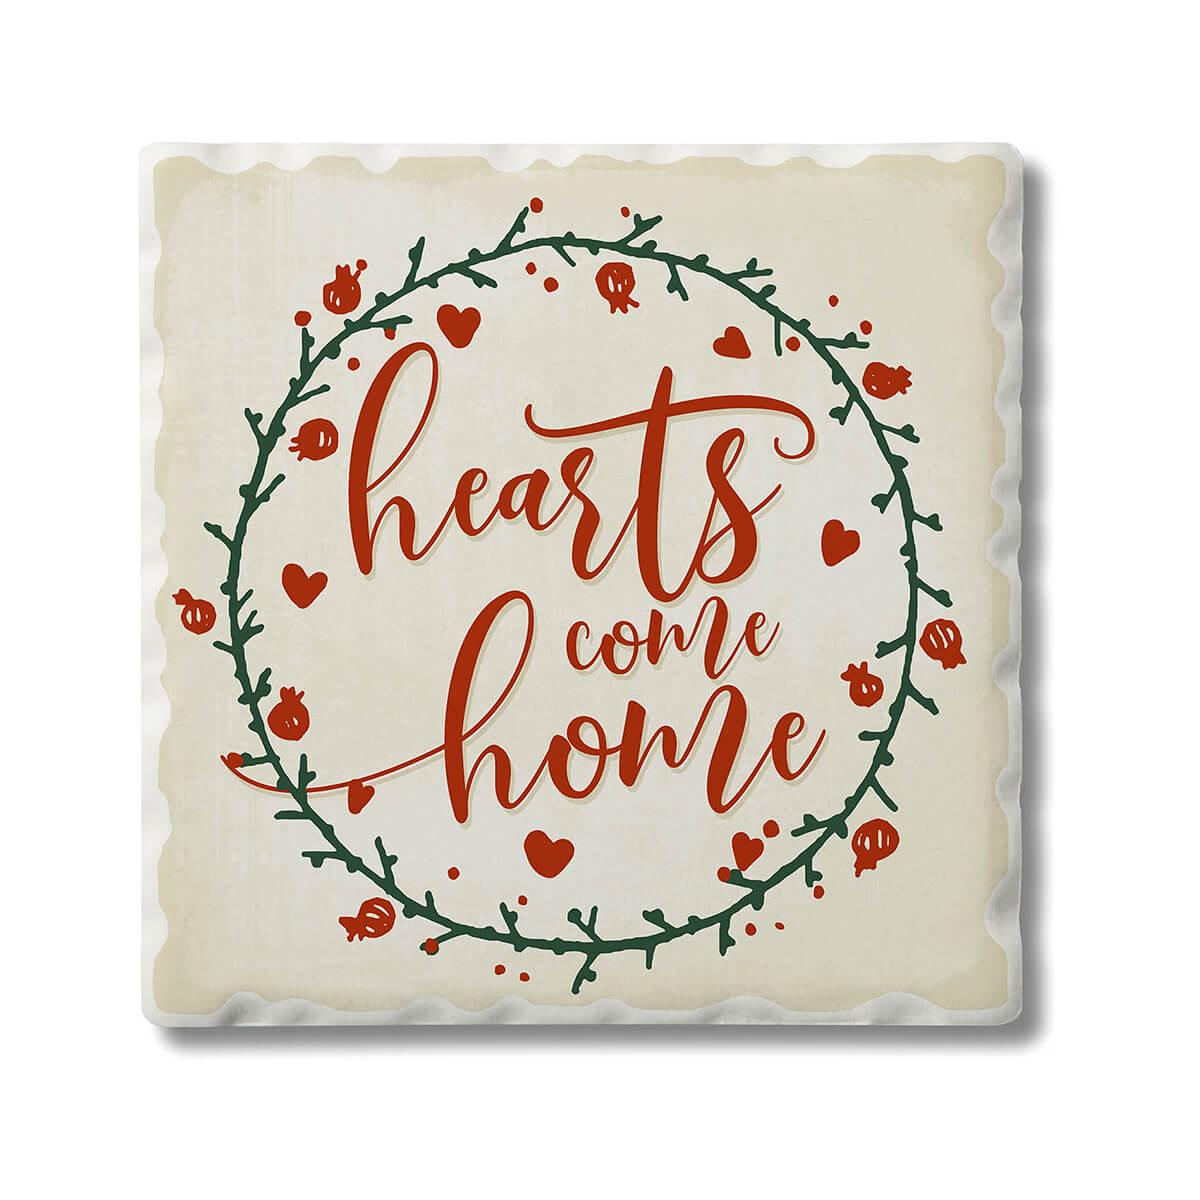  Hearts Come Home Single Tile Coaster